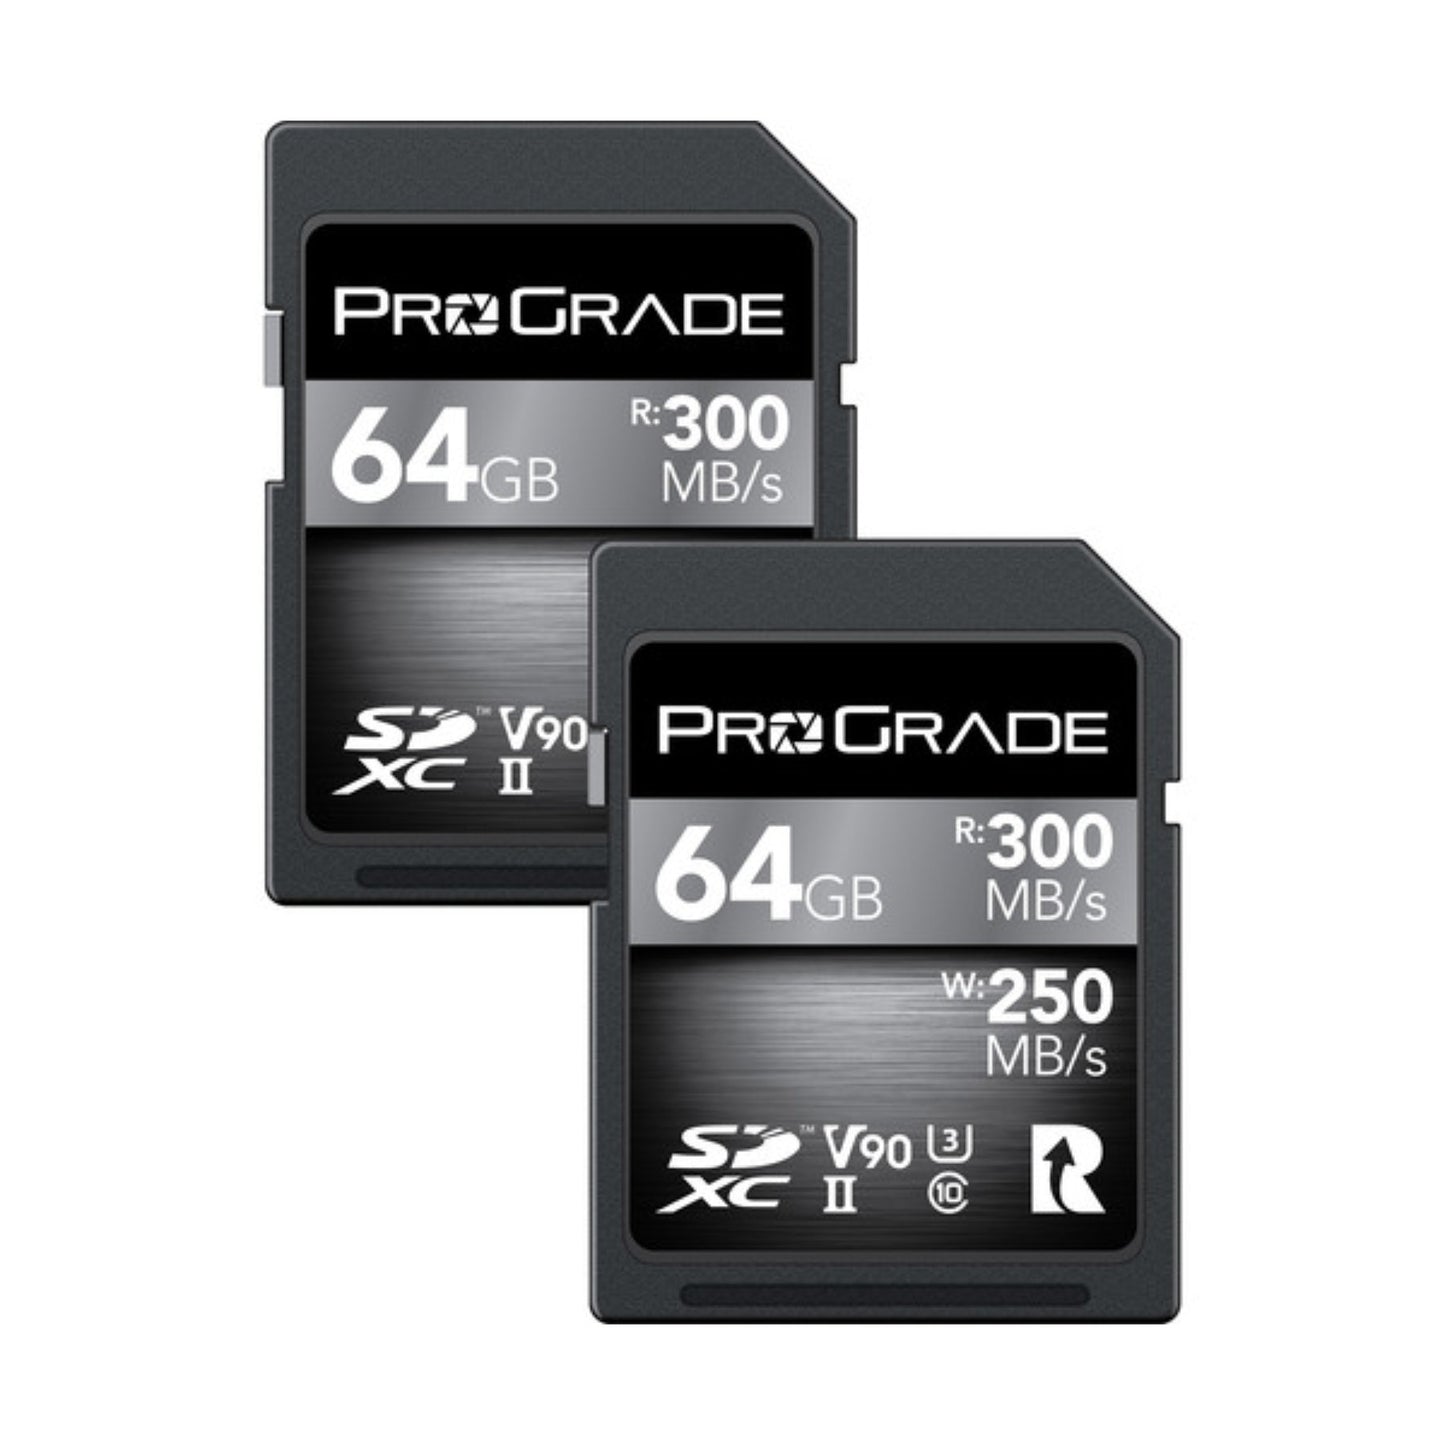 ProGrade Digital 64GB UHS-II SDXC Memory Card (2-Pack)